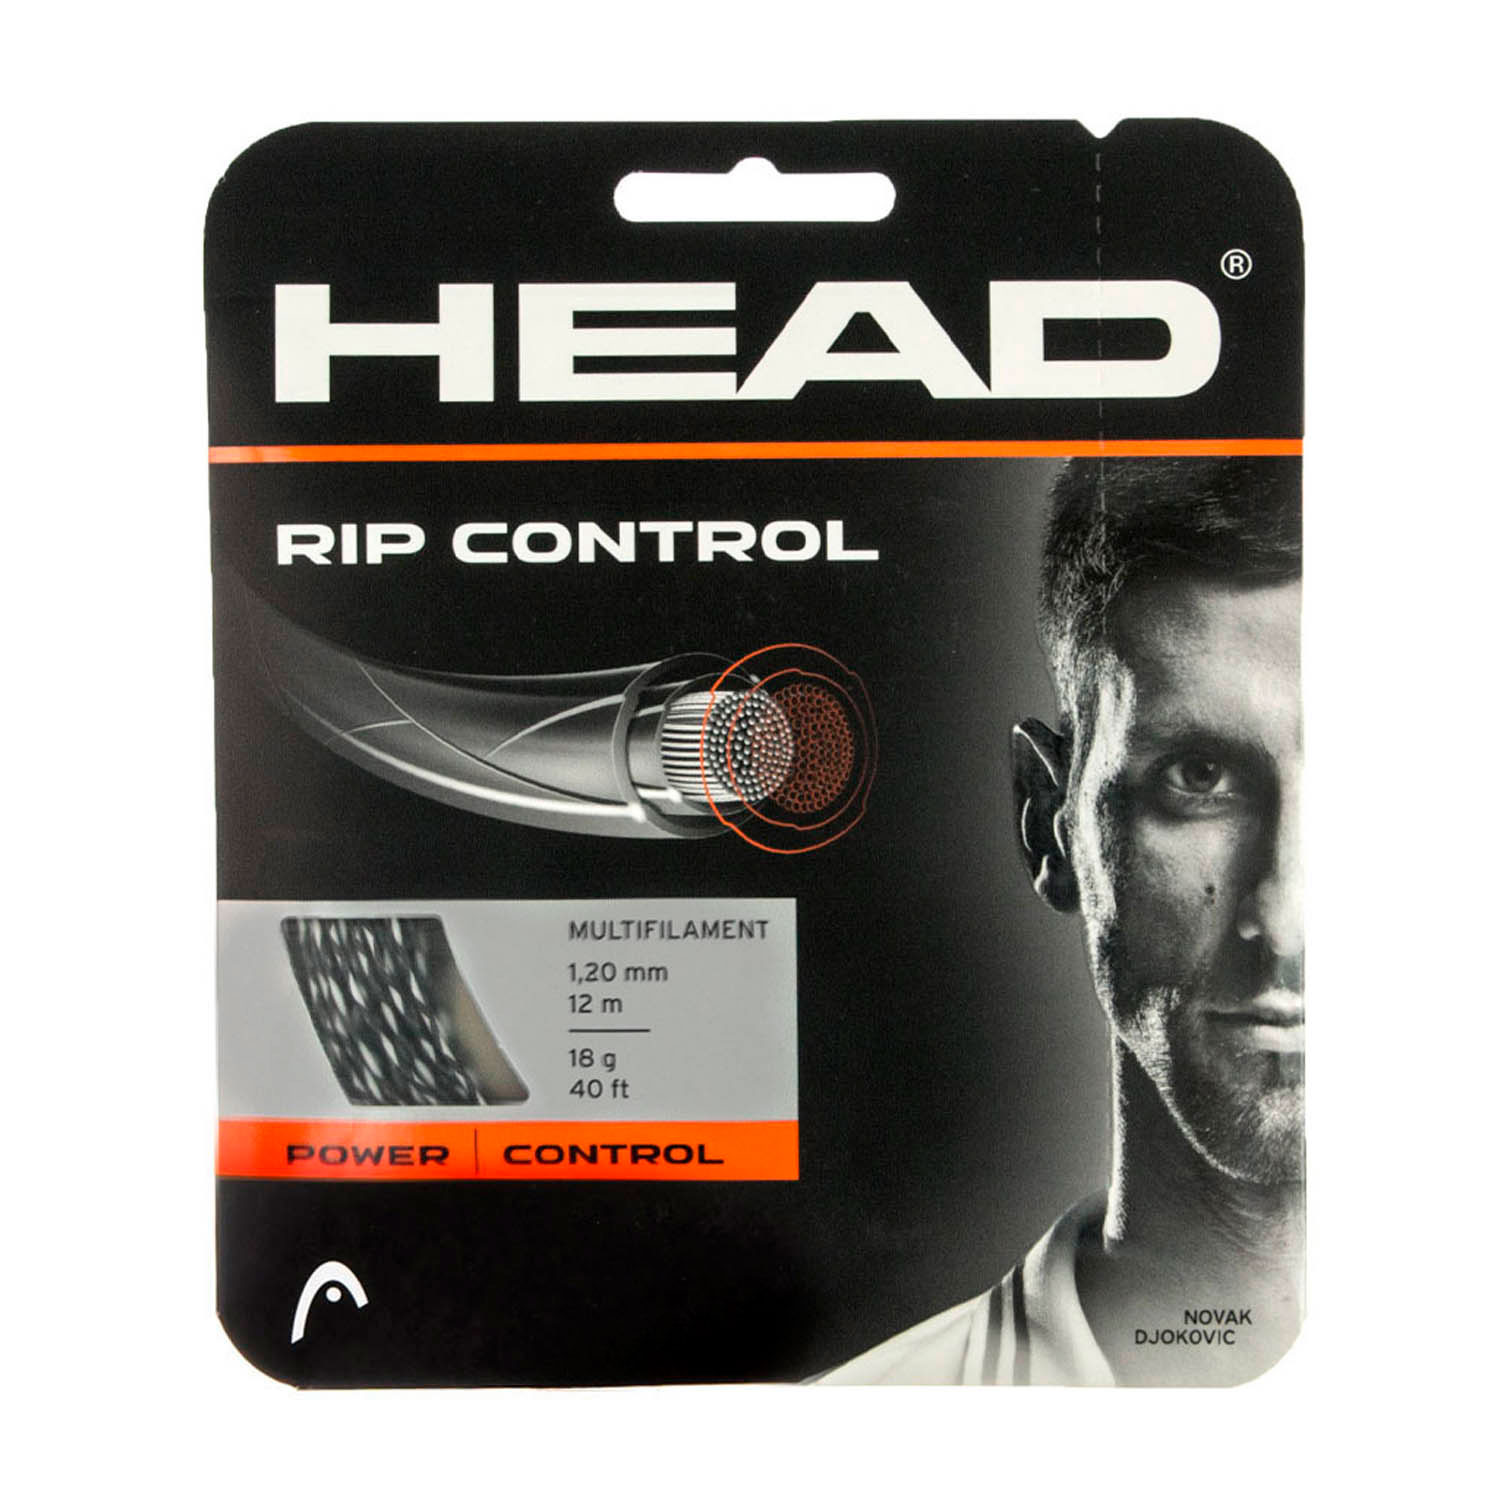 Head Rip Control 1.20 12 m Set - Black/White